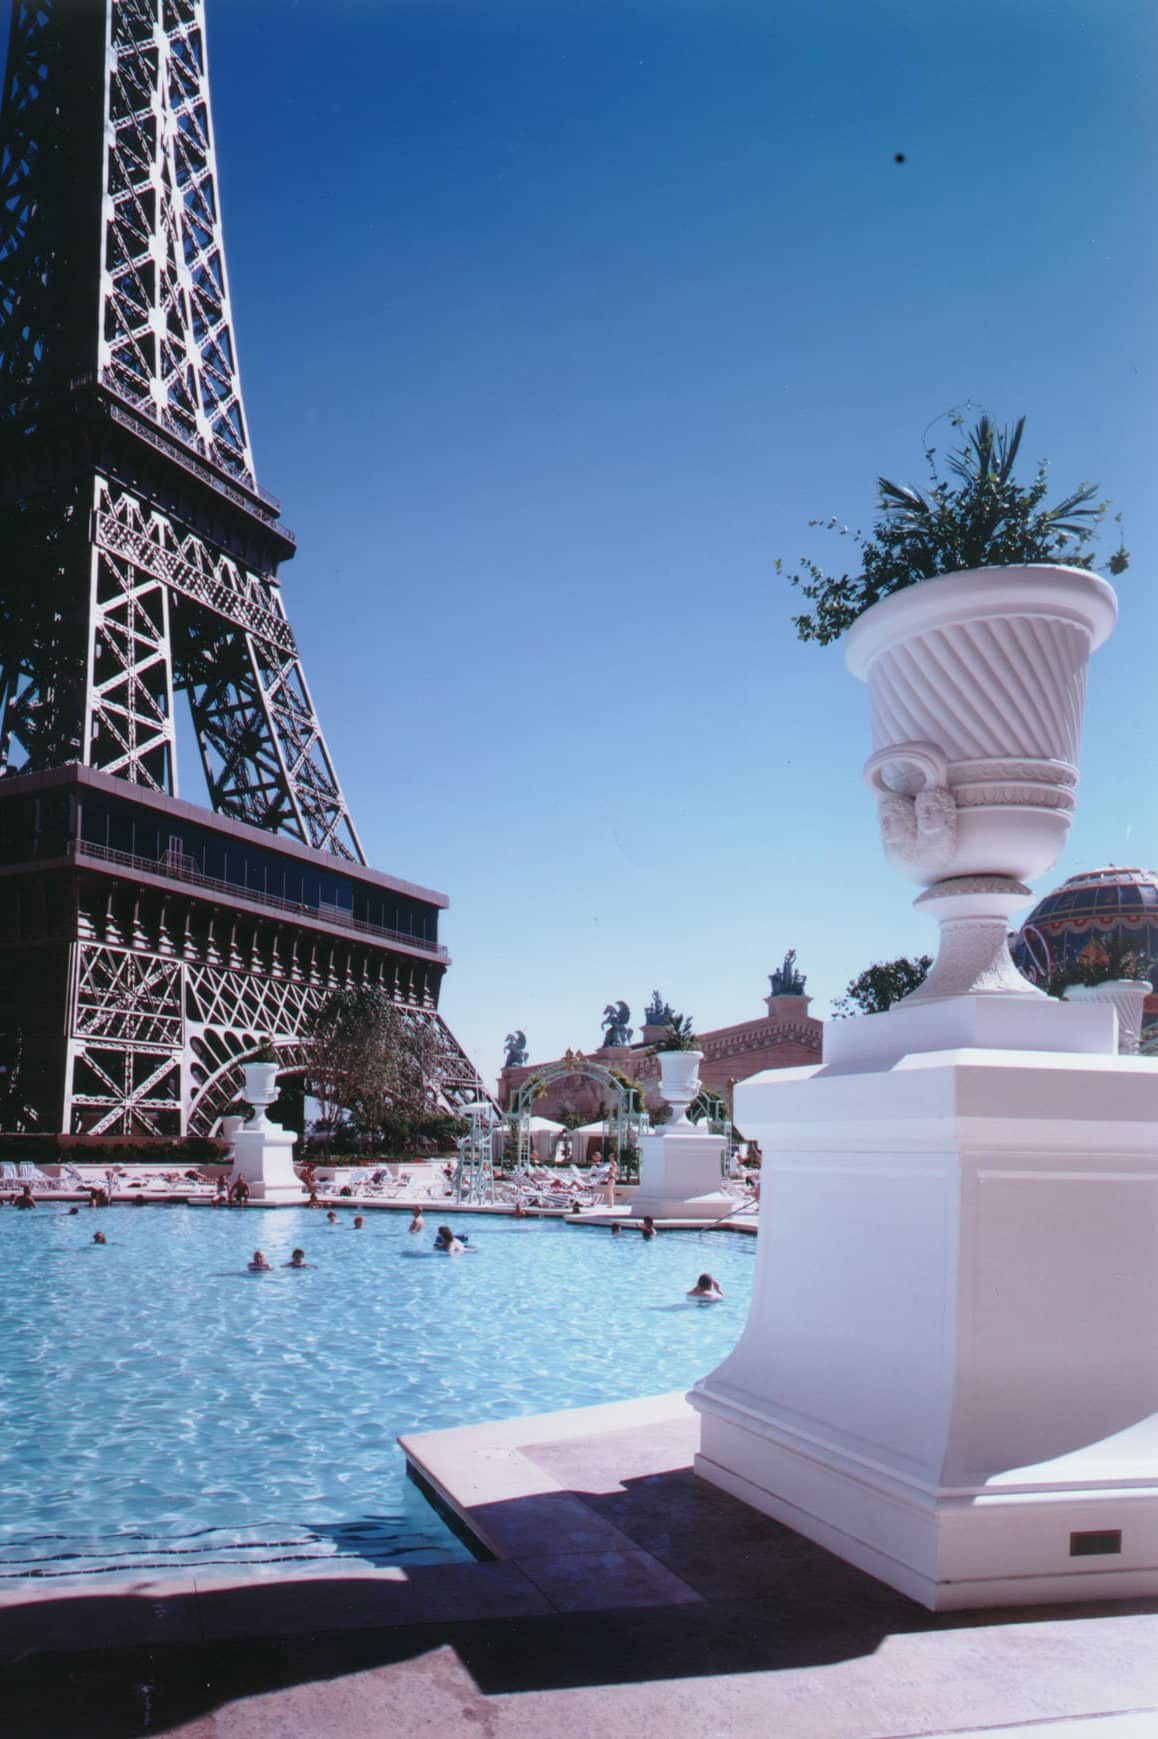 Paris Hotel Las Vegas Tour, Soleil Pool, Burgundy Room, Le Boulevard shops  casino, we look at it all 